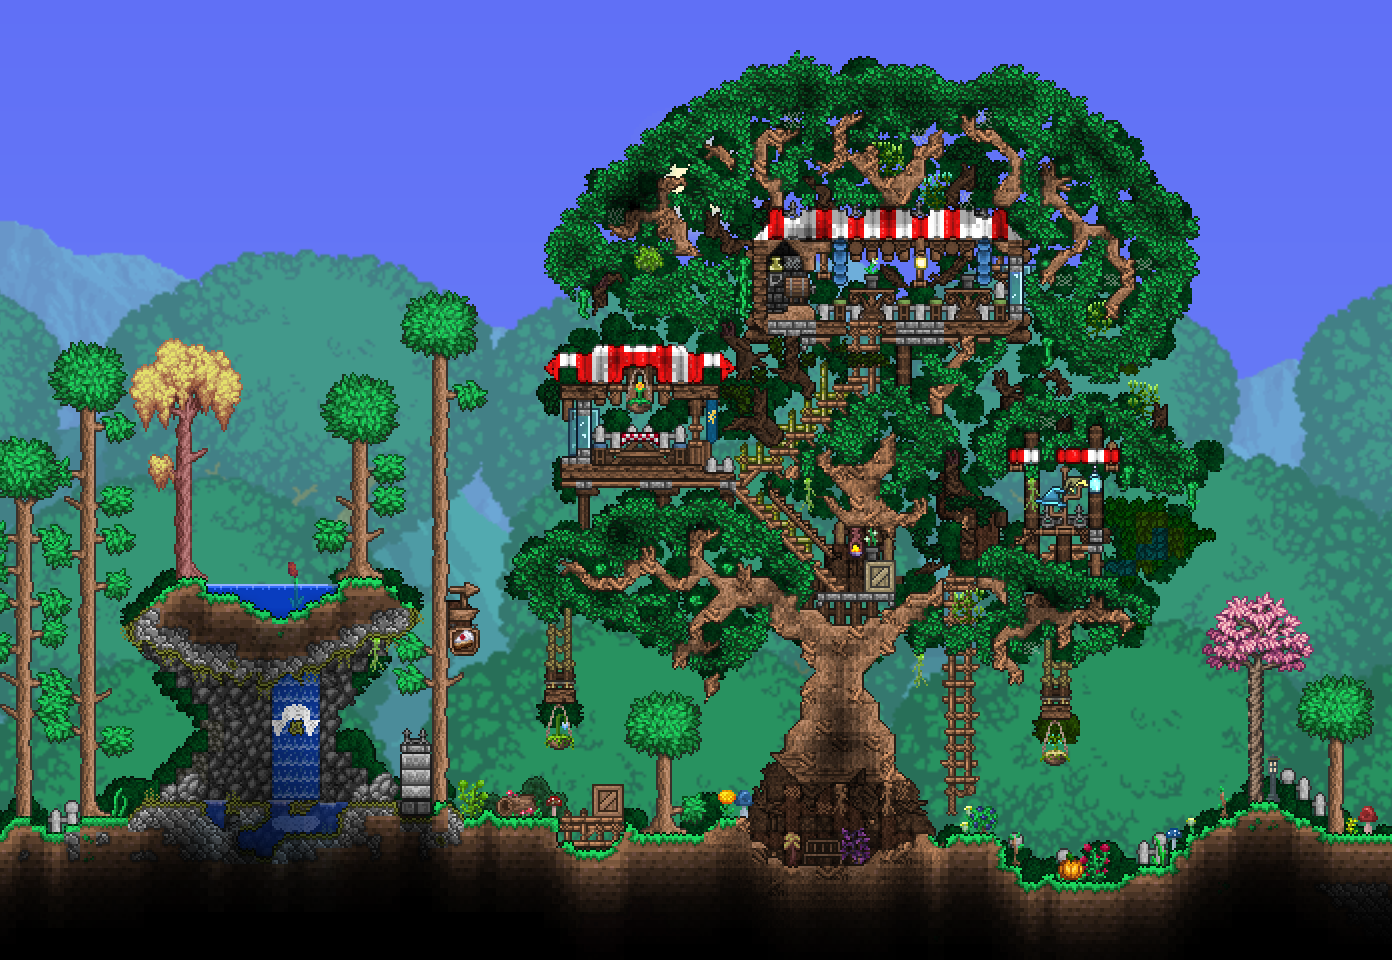 Tree café in a woodland